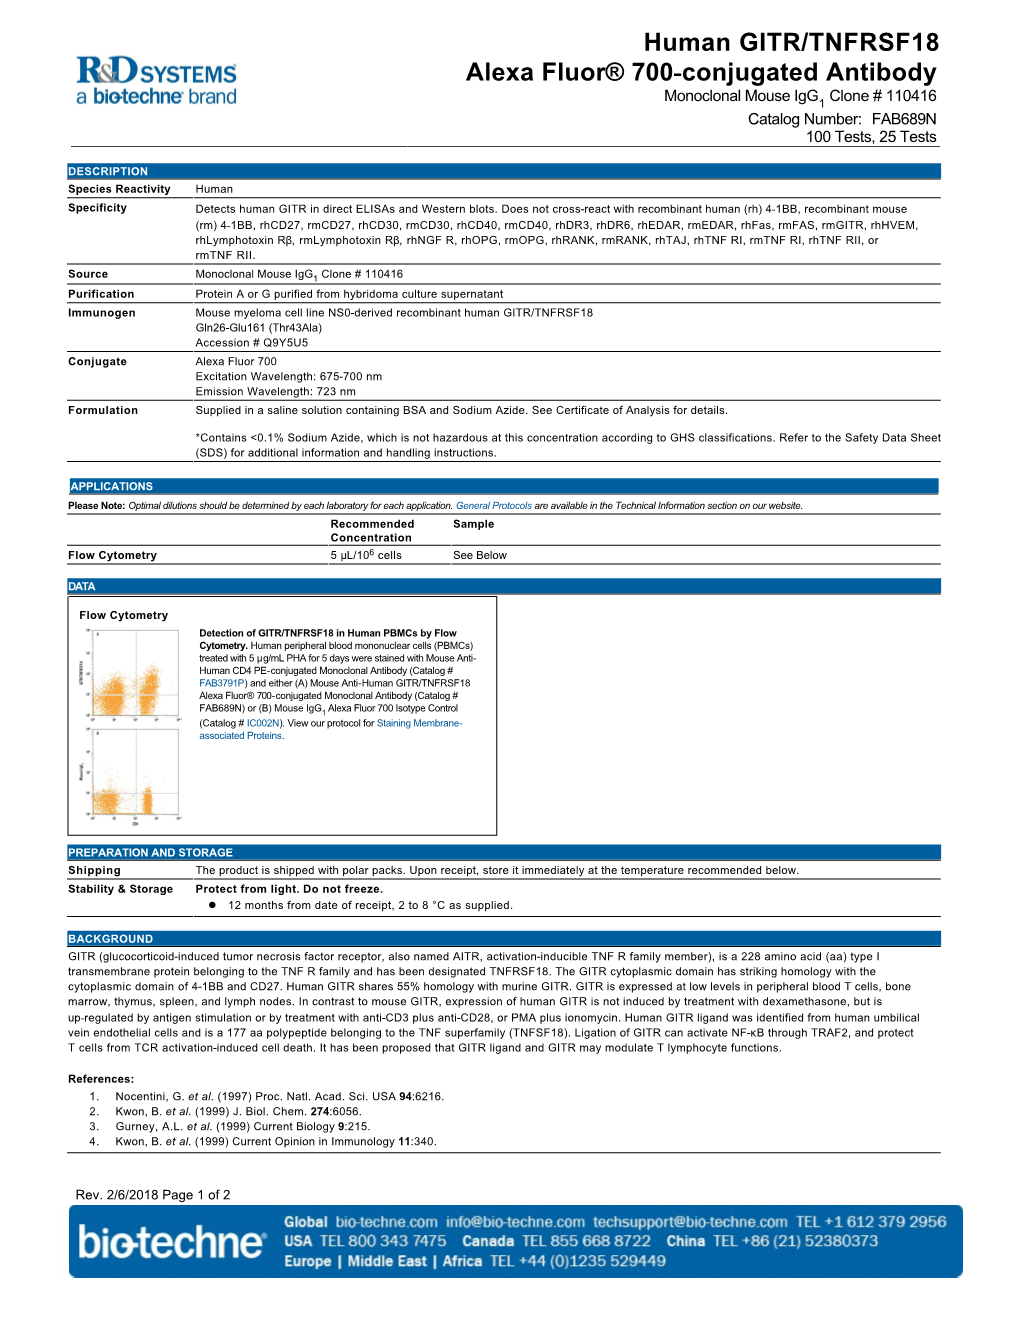 Human GITR/TNFRSF18 Alexa Fluor® 700-Conjugated Antibody